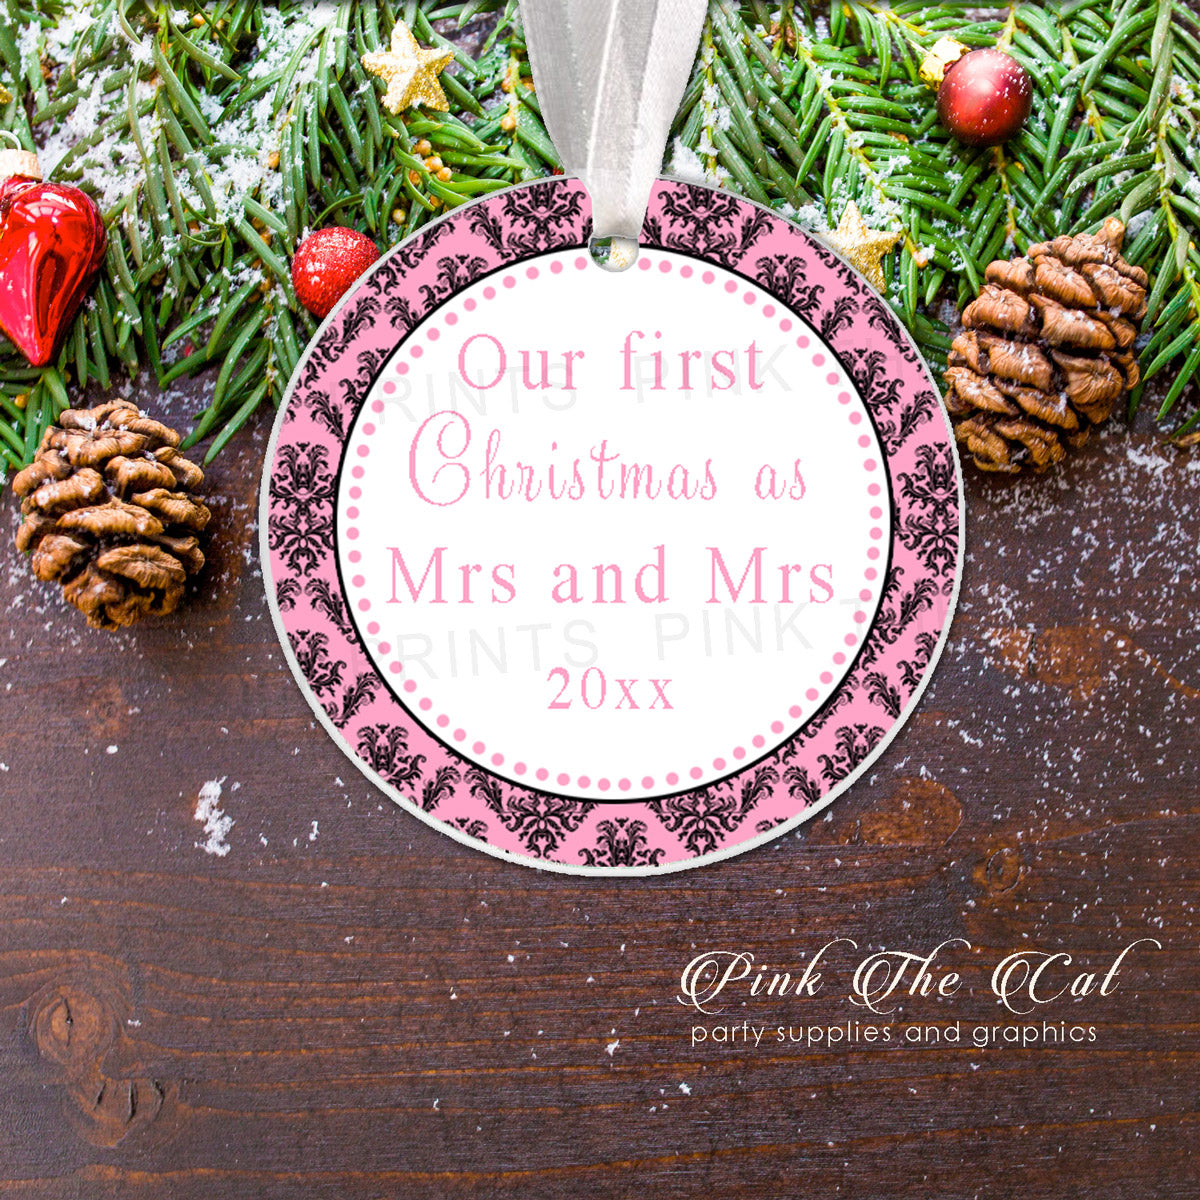 Personalized Christmas ornament newlyweds pink black